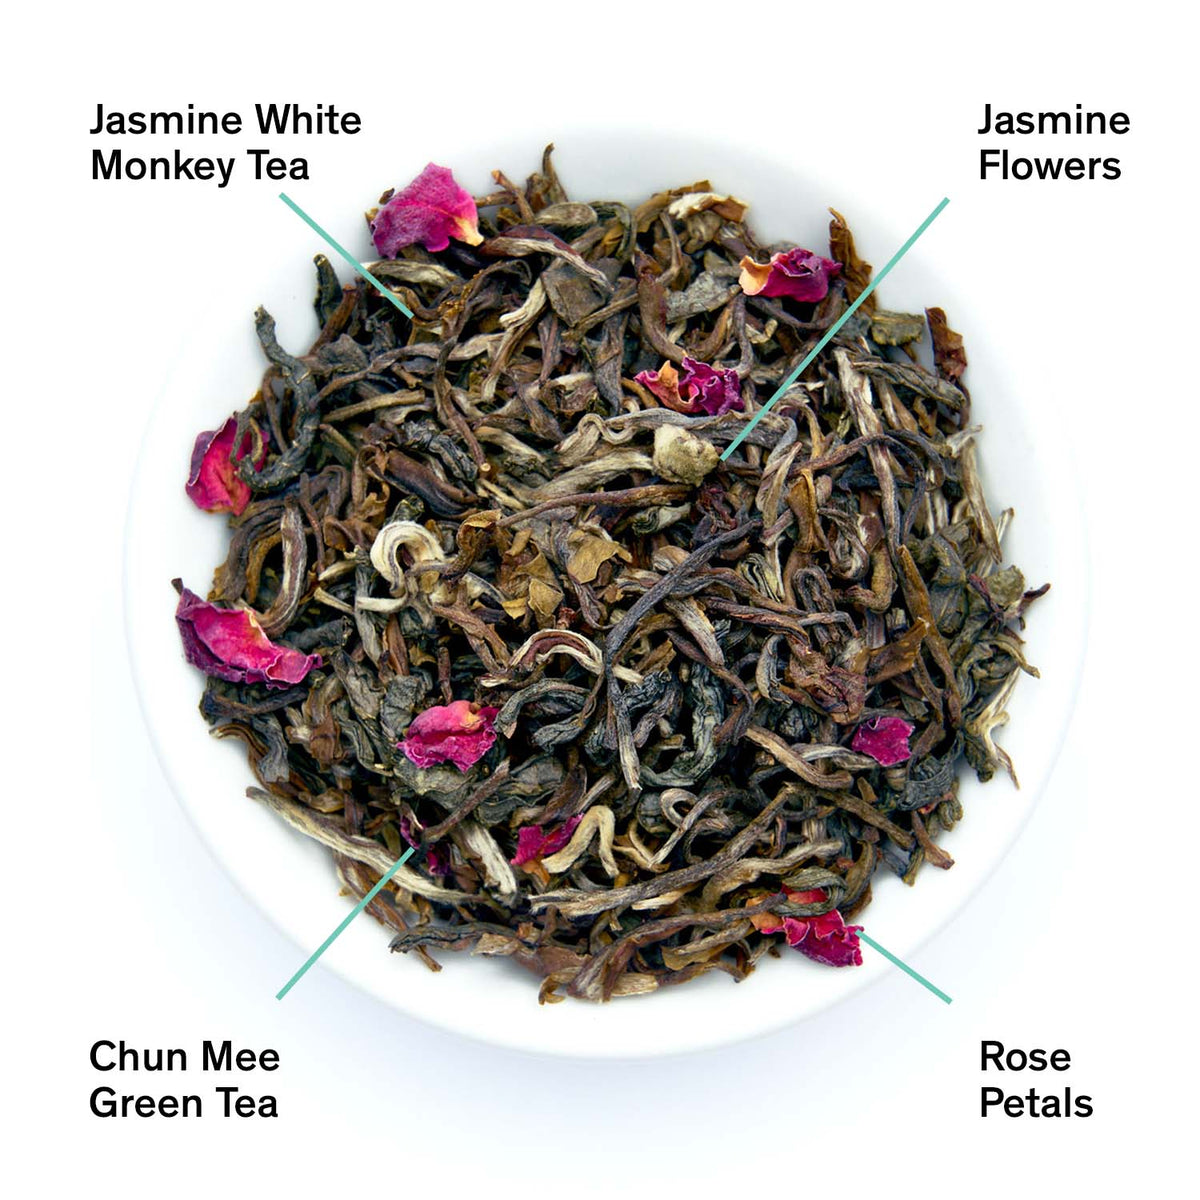 Dolomite: Almond Jasmine Green Tea